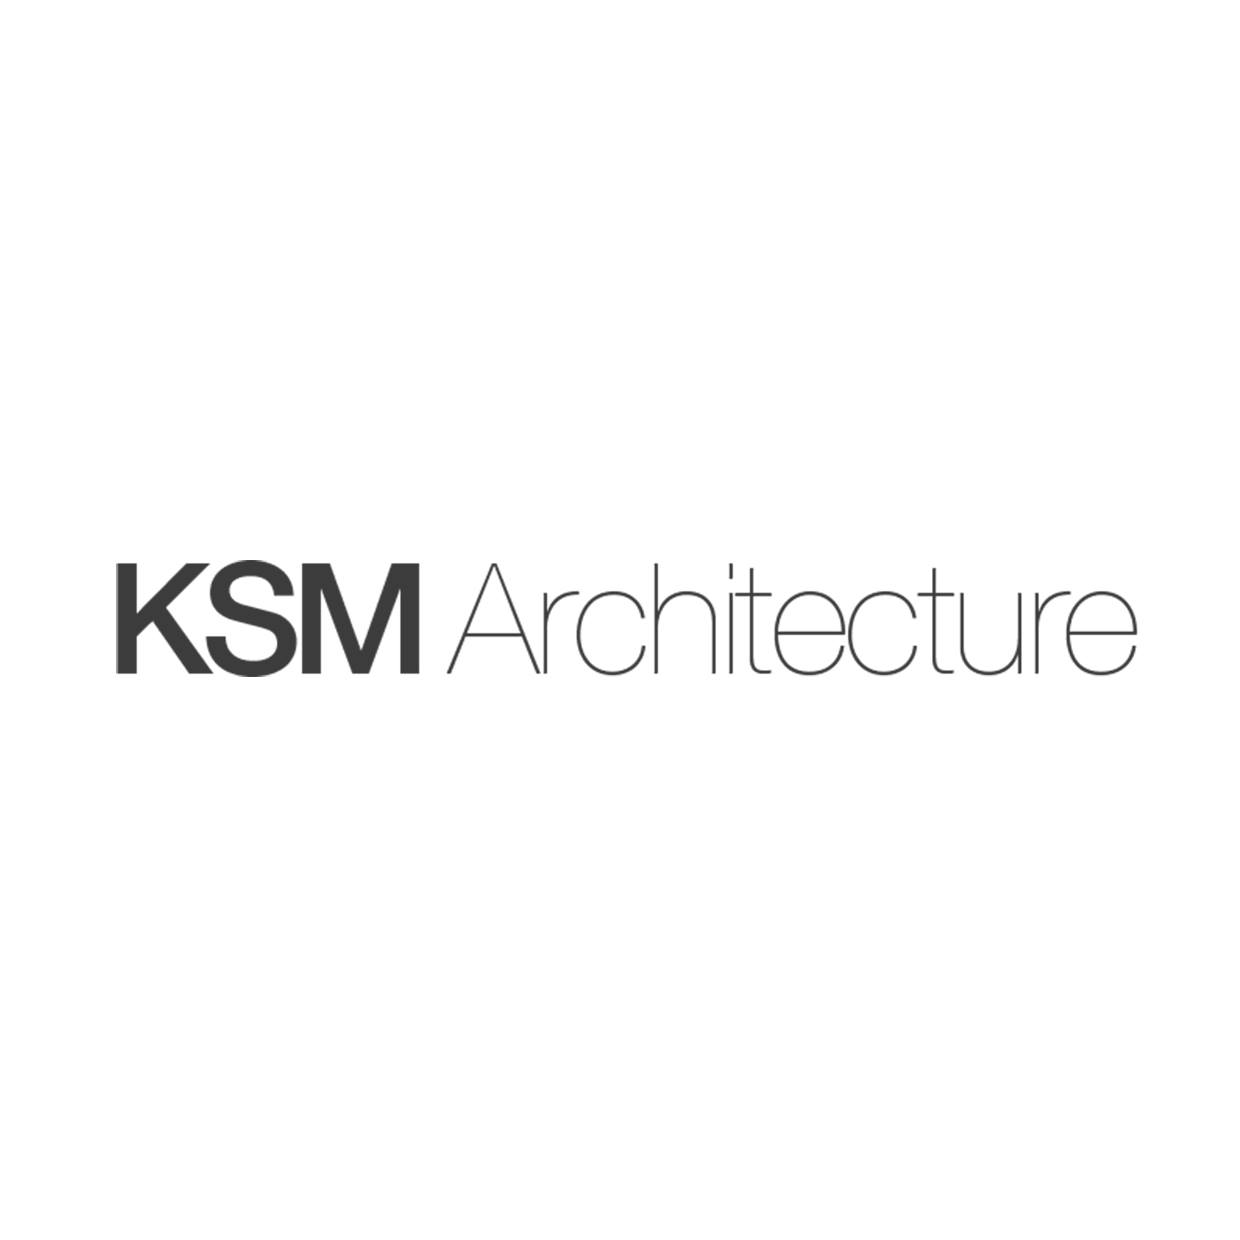 KSM Architecture|Architect|Professional Services